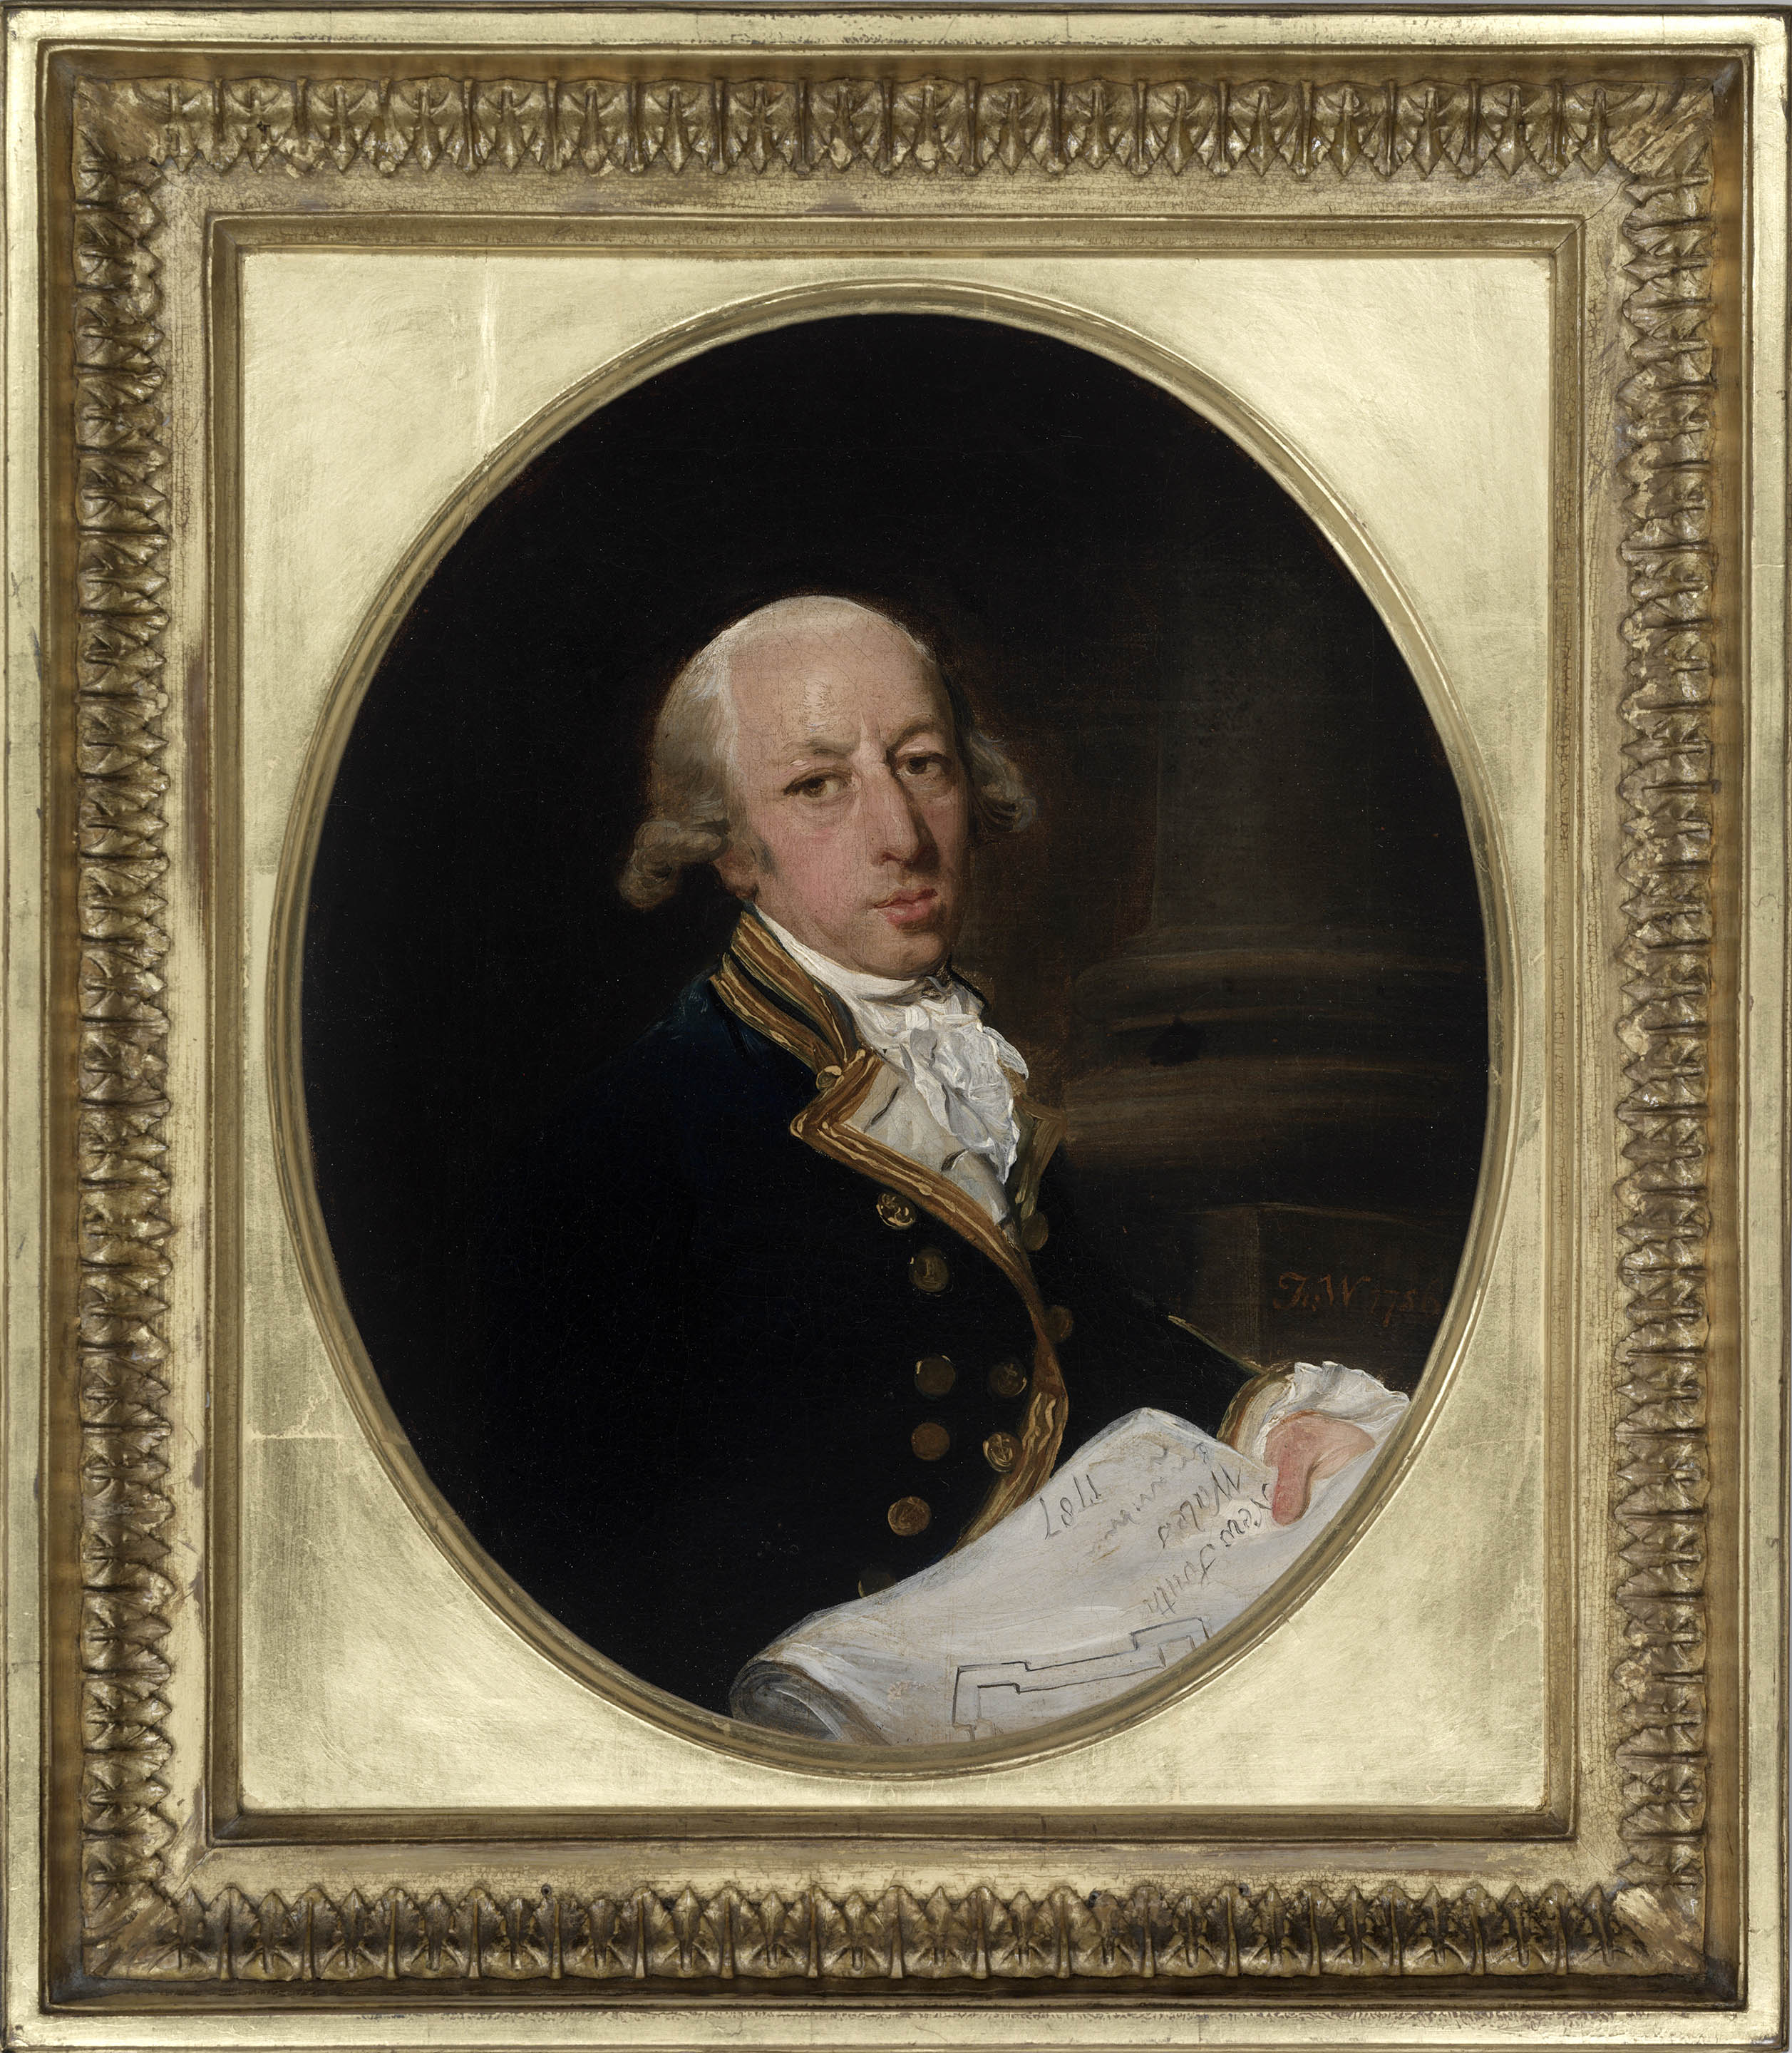  Captain Arthur Phillip, painted by Francis Wheatley